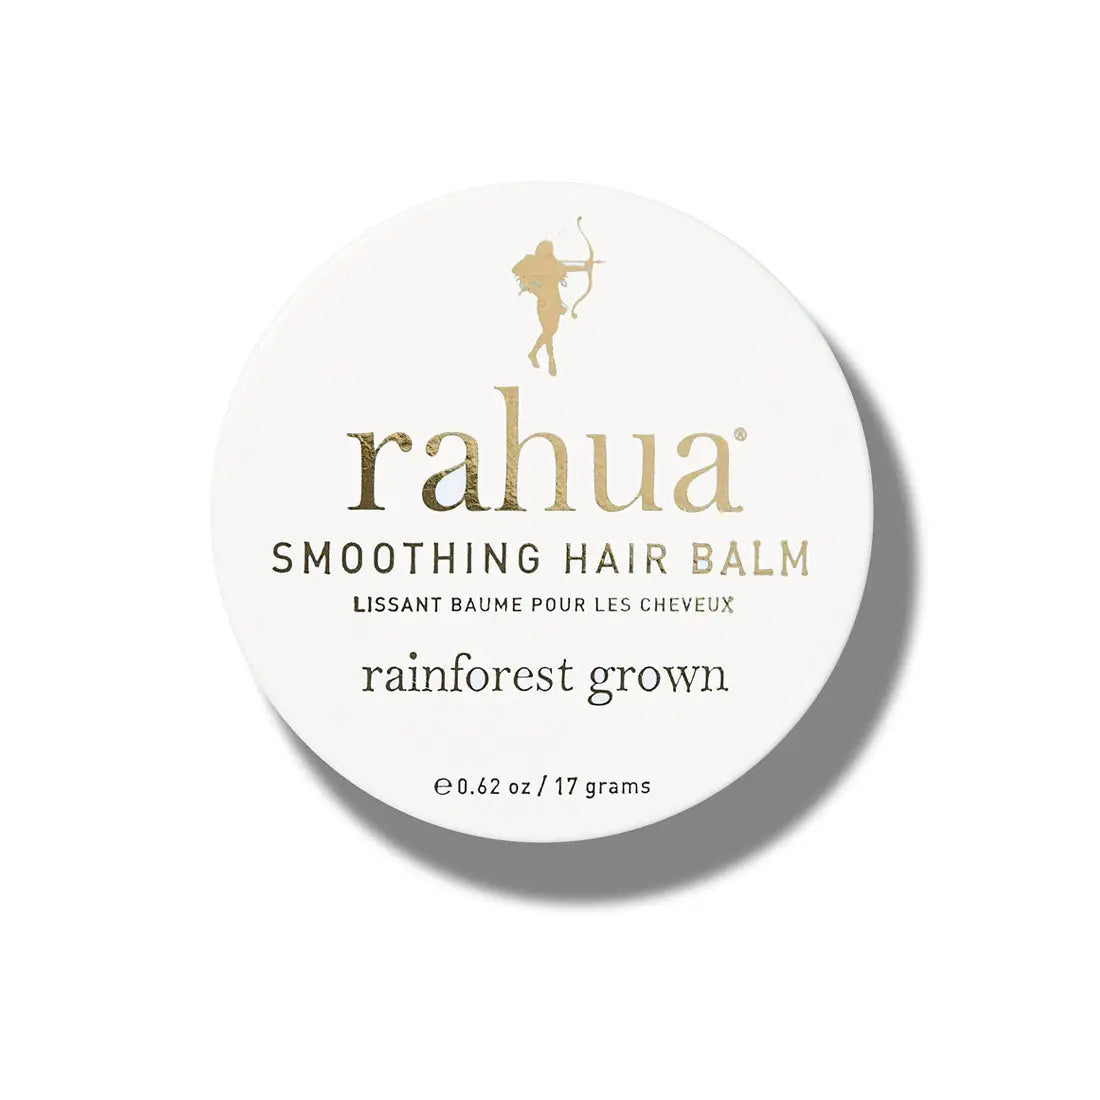 Rahua Smoothing Hair Balm 17g